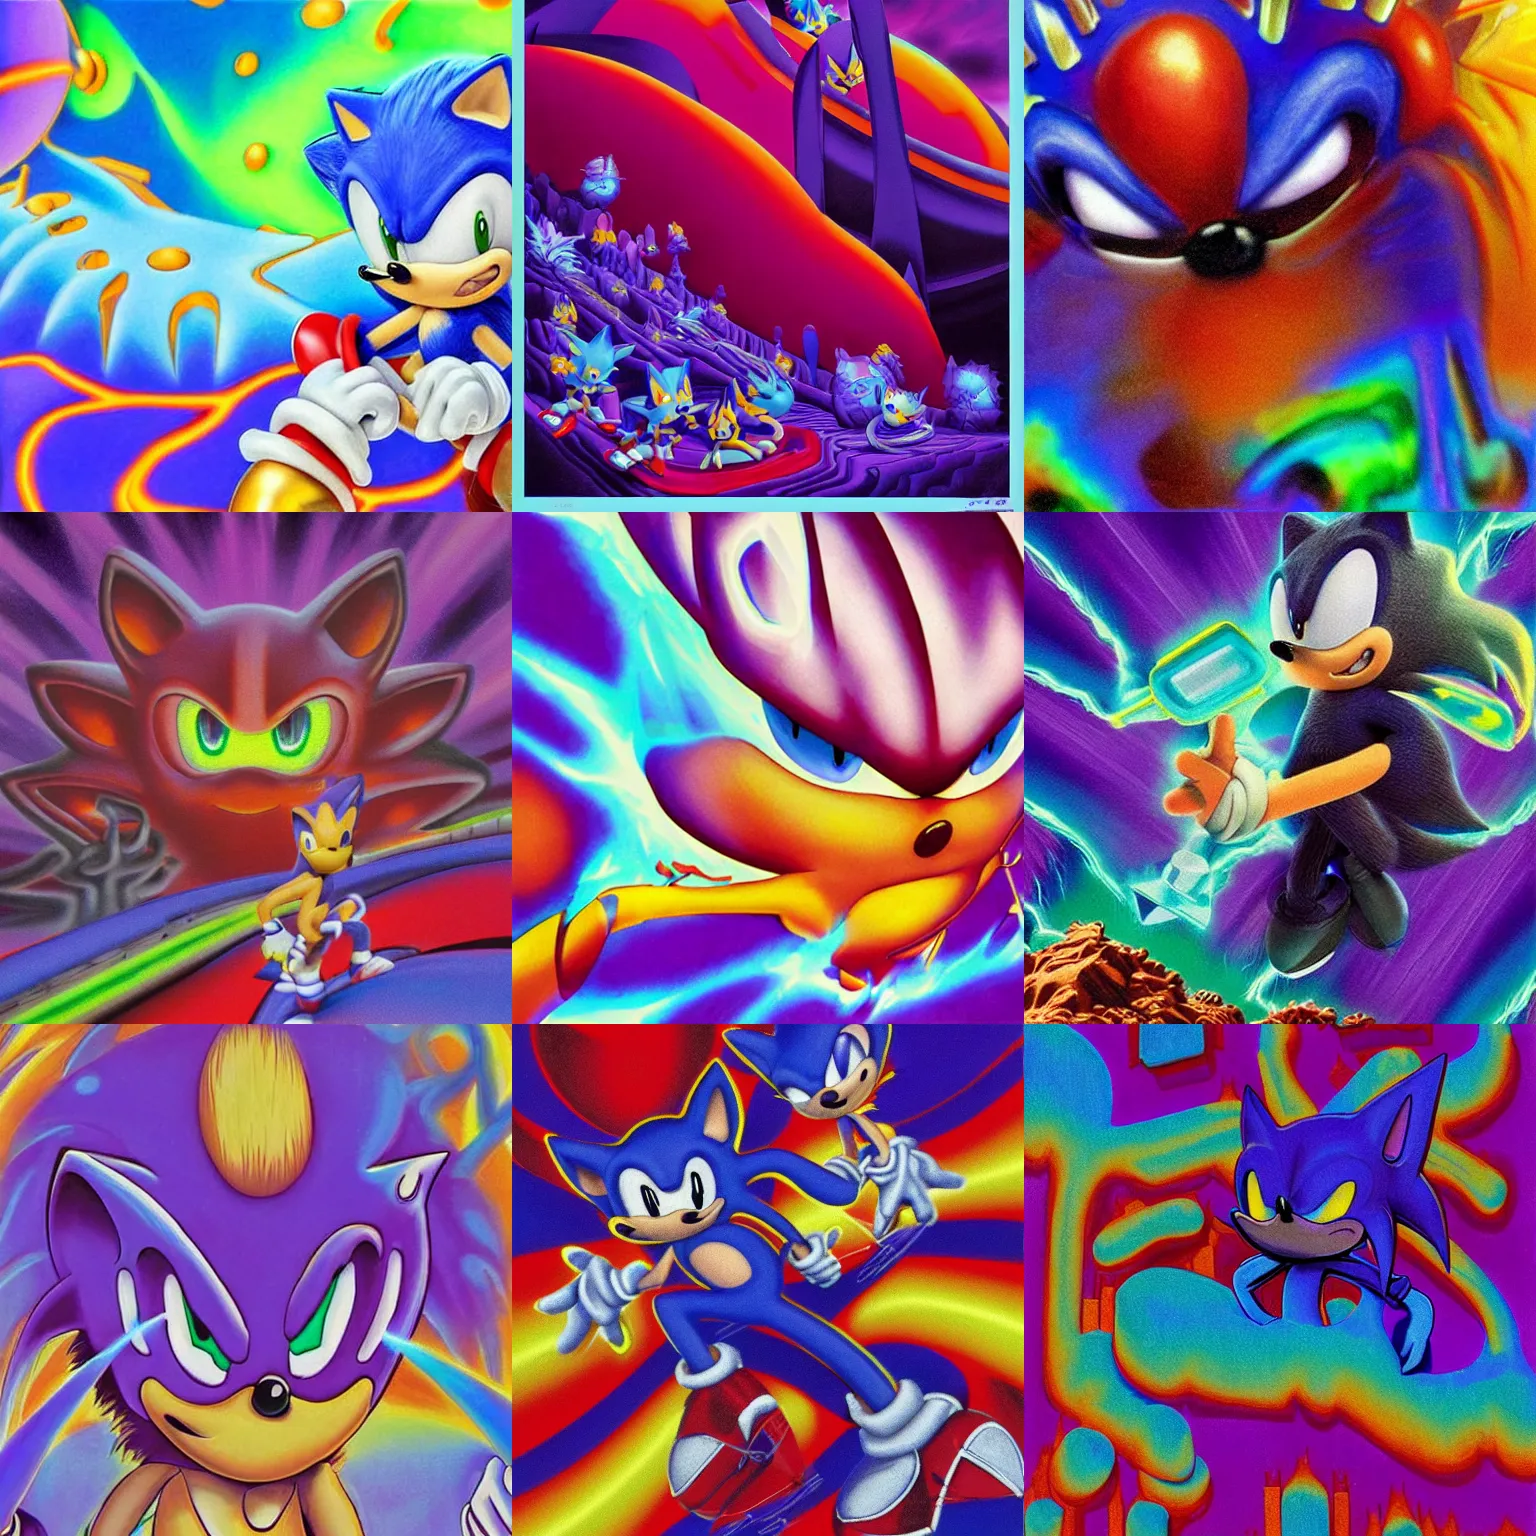 Shadow the Hedgehog in Sonic the Hedgehog - Sonic Retro